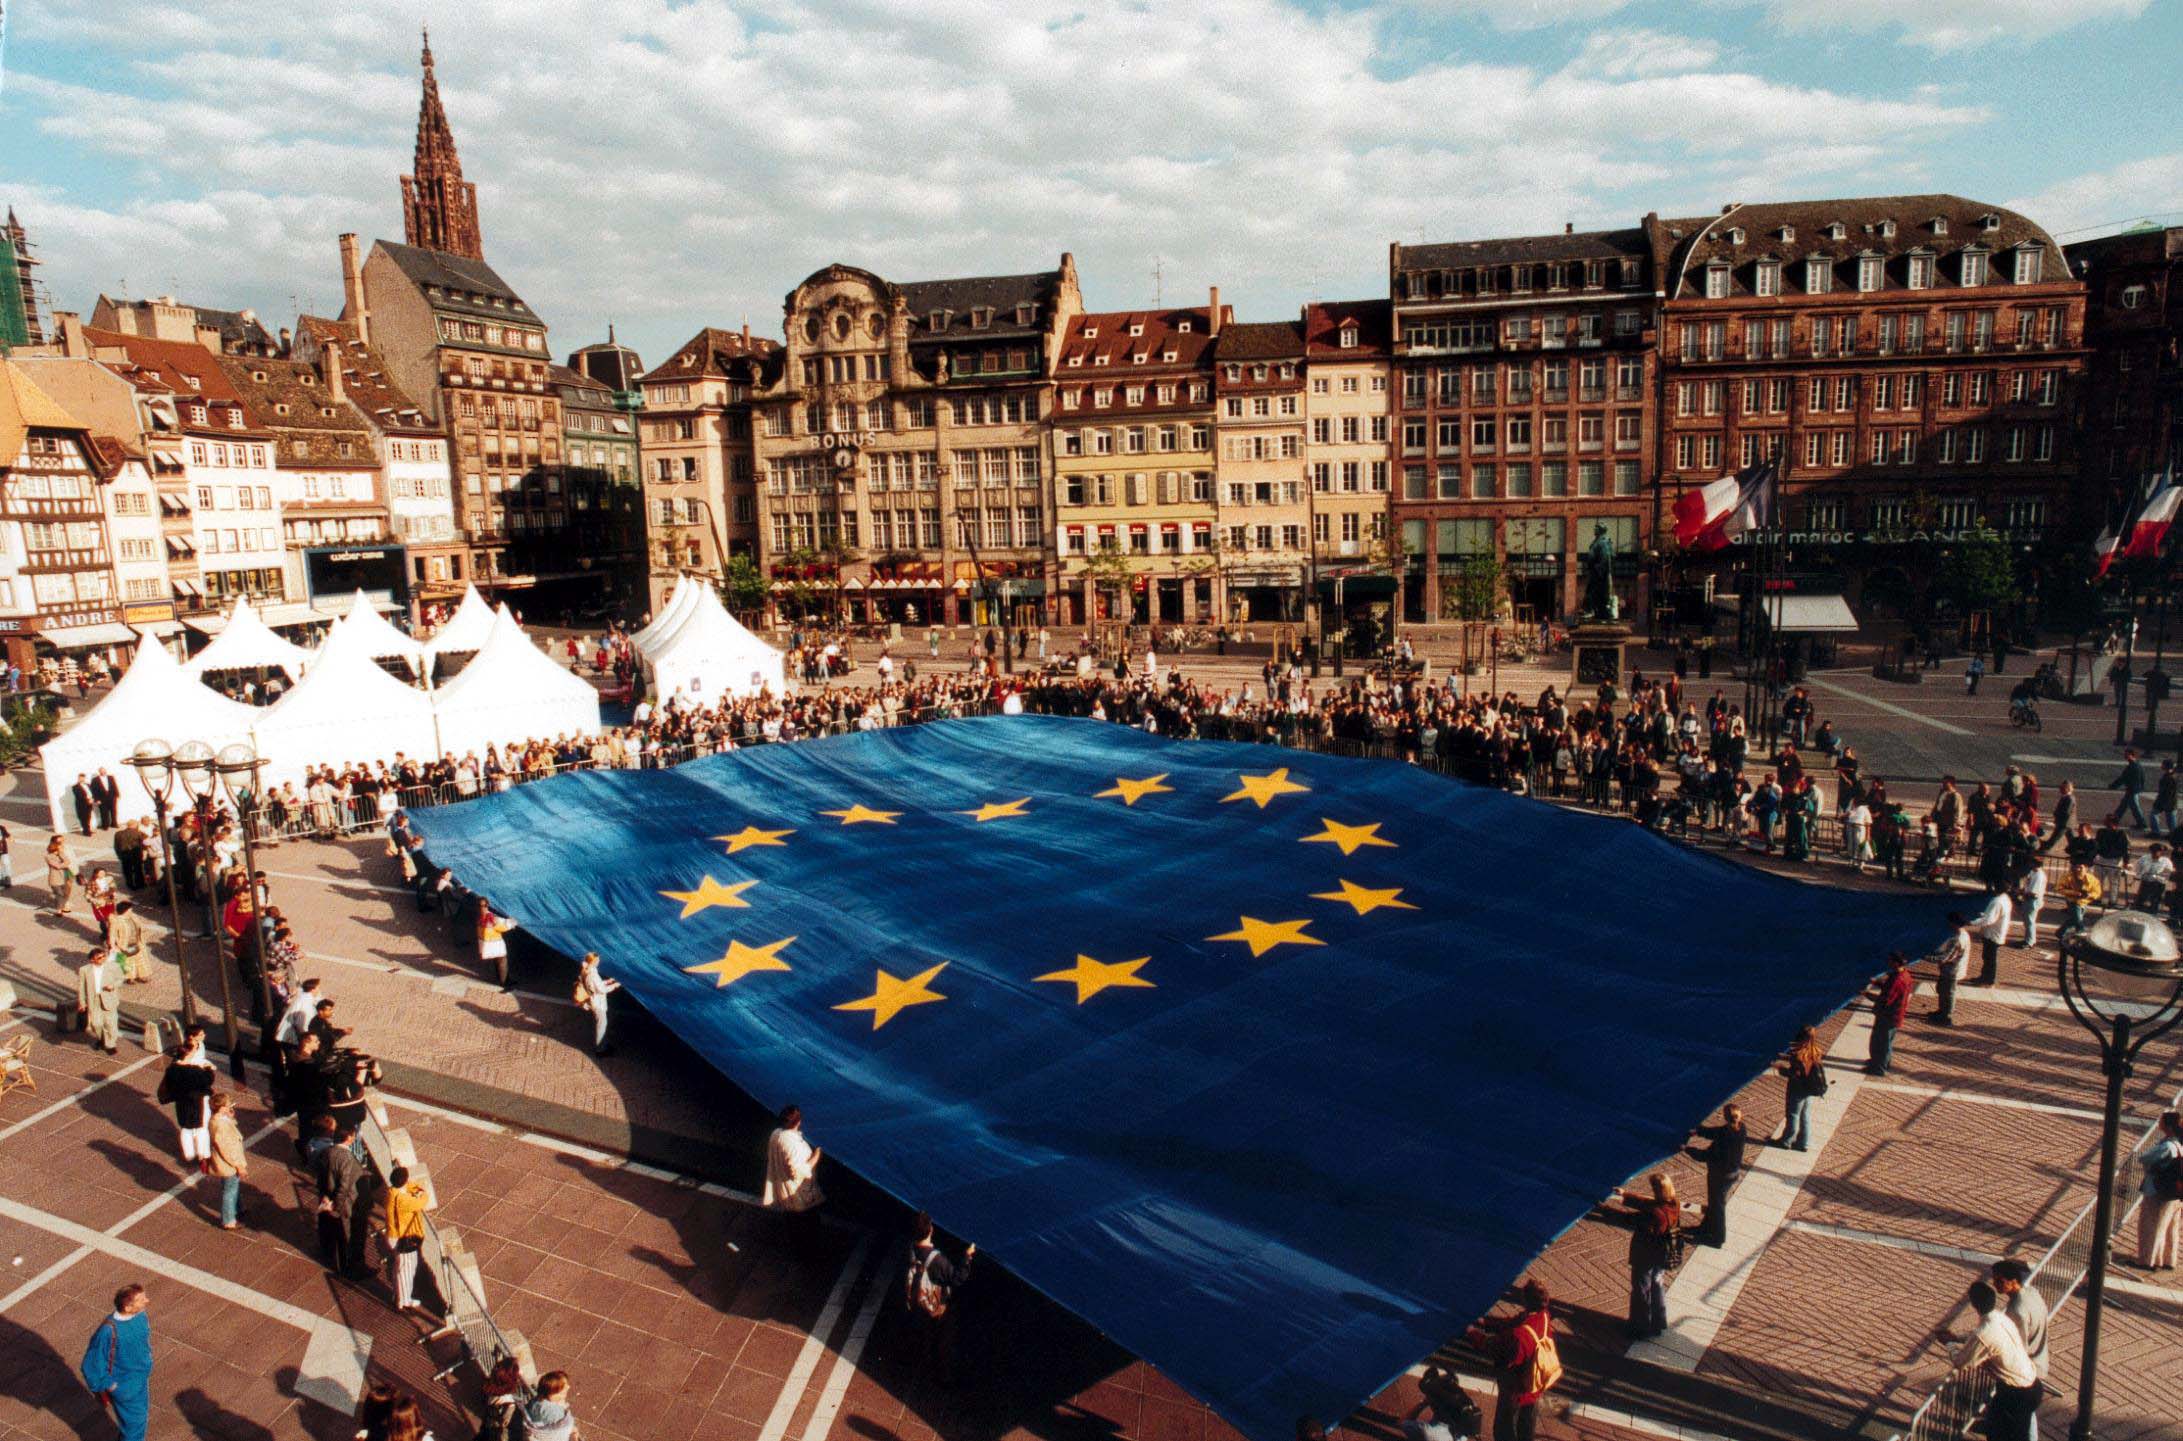 Blue and 12 stars. The European Flag